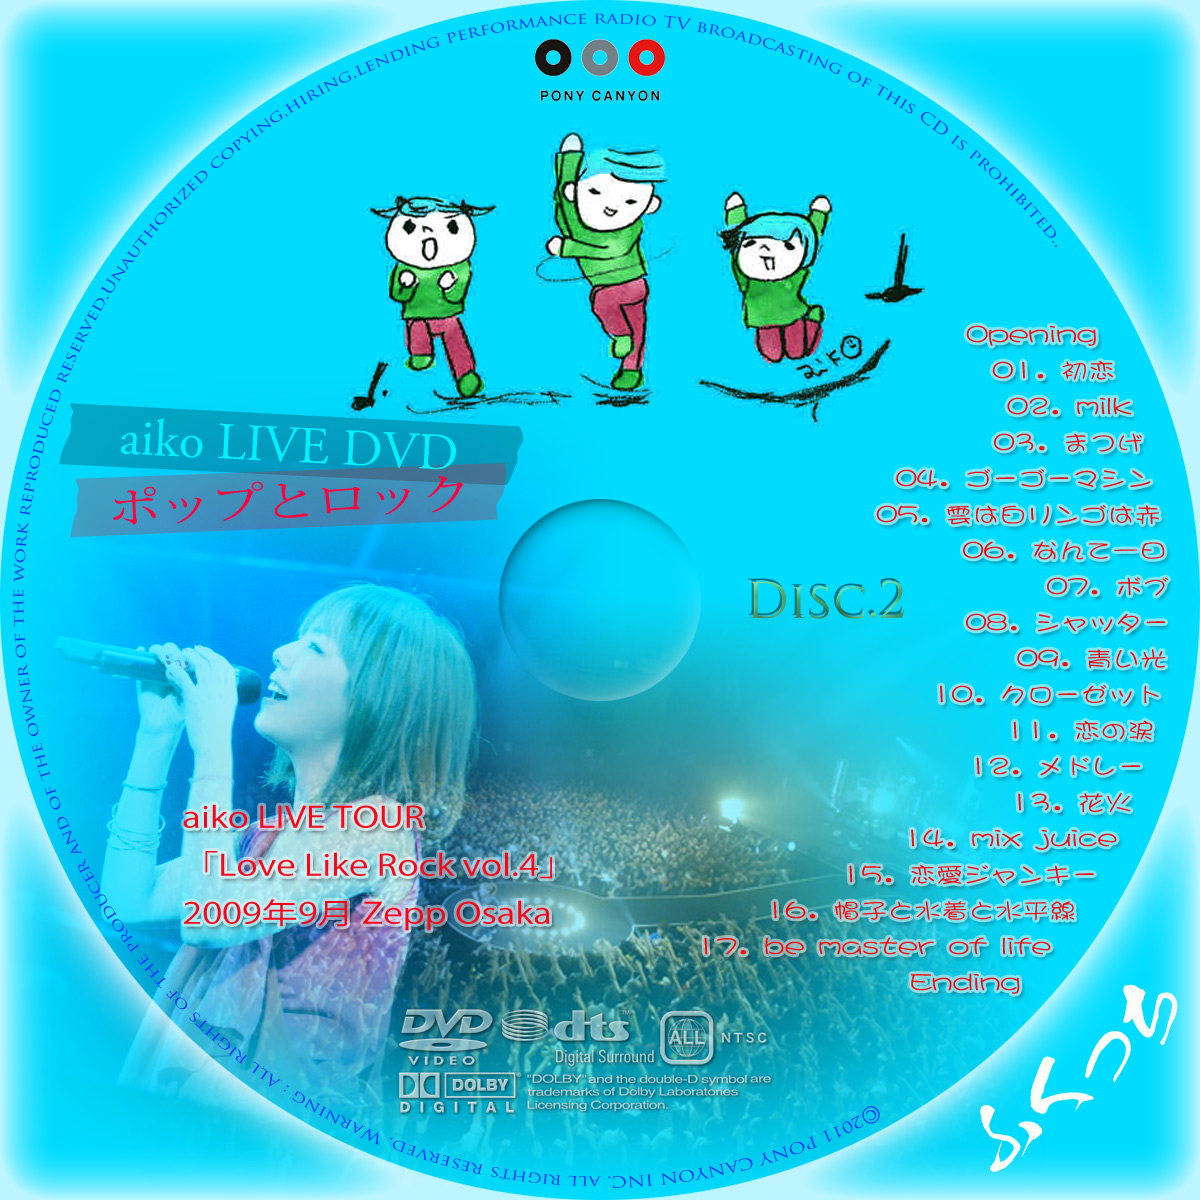 aiko 「ウタウイヌ」 「Love Like Pop」DVD 2枚セット - ミュージック